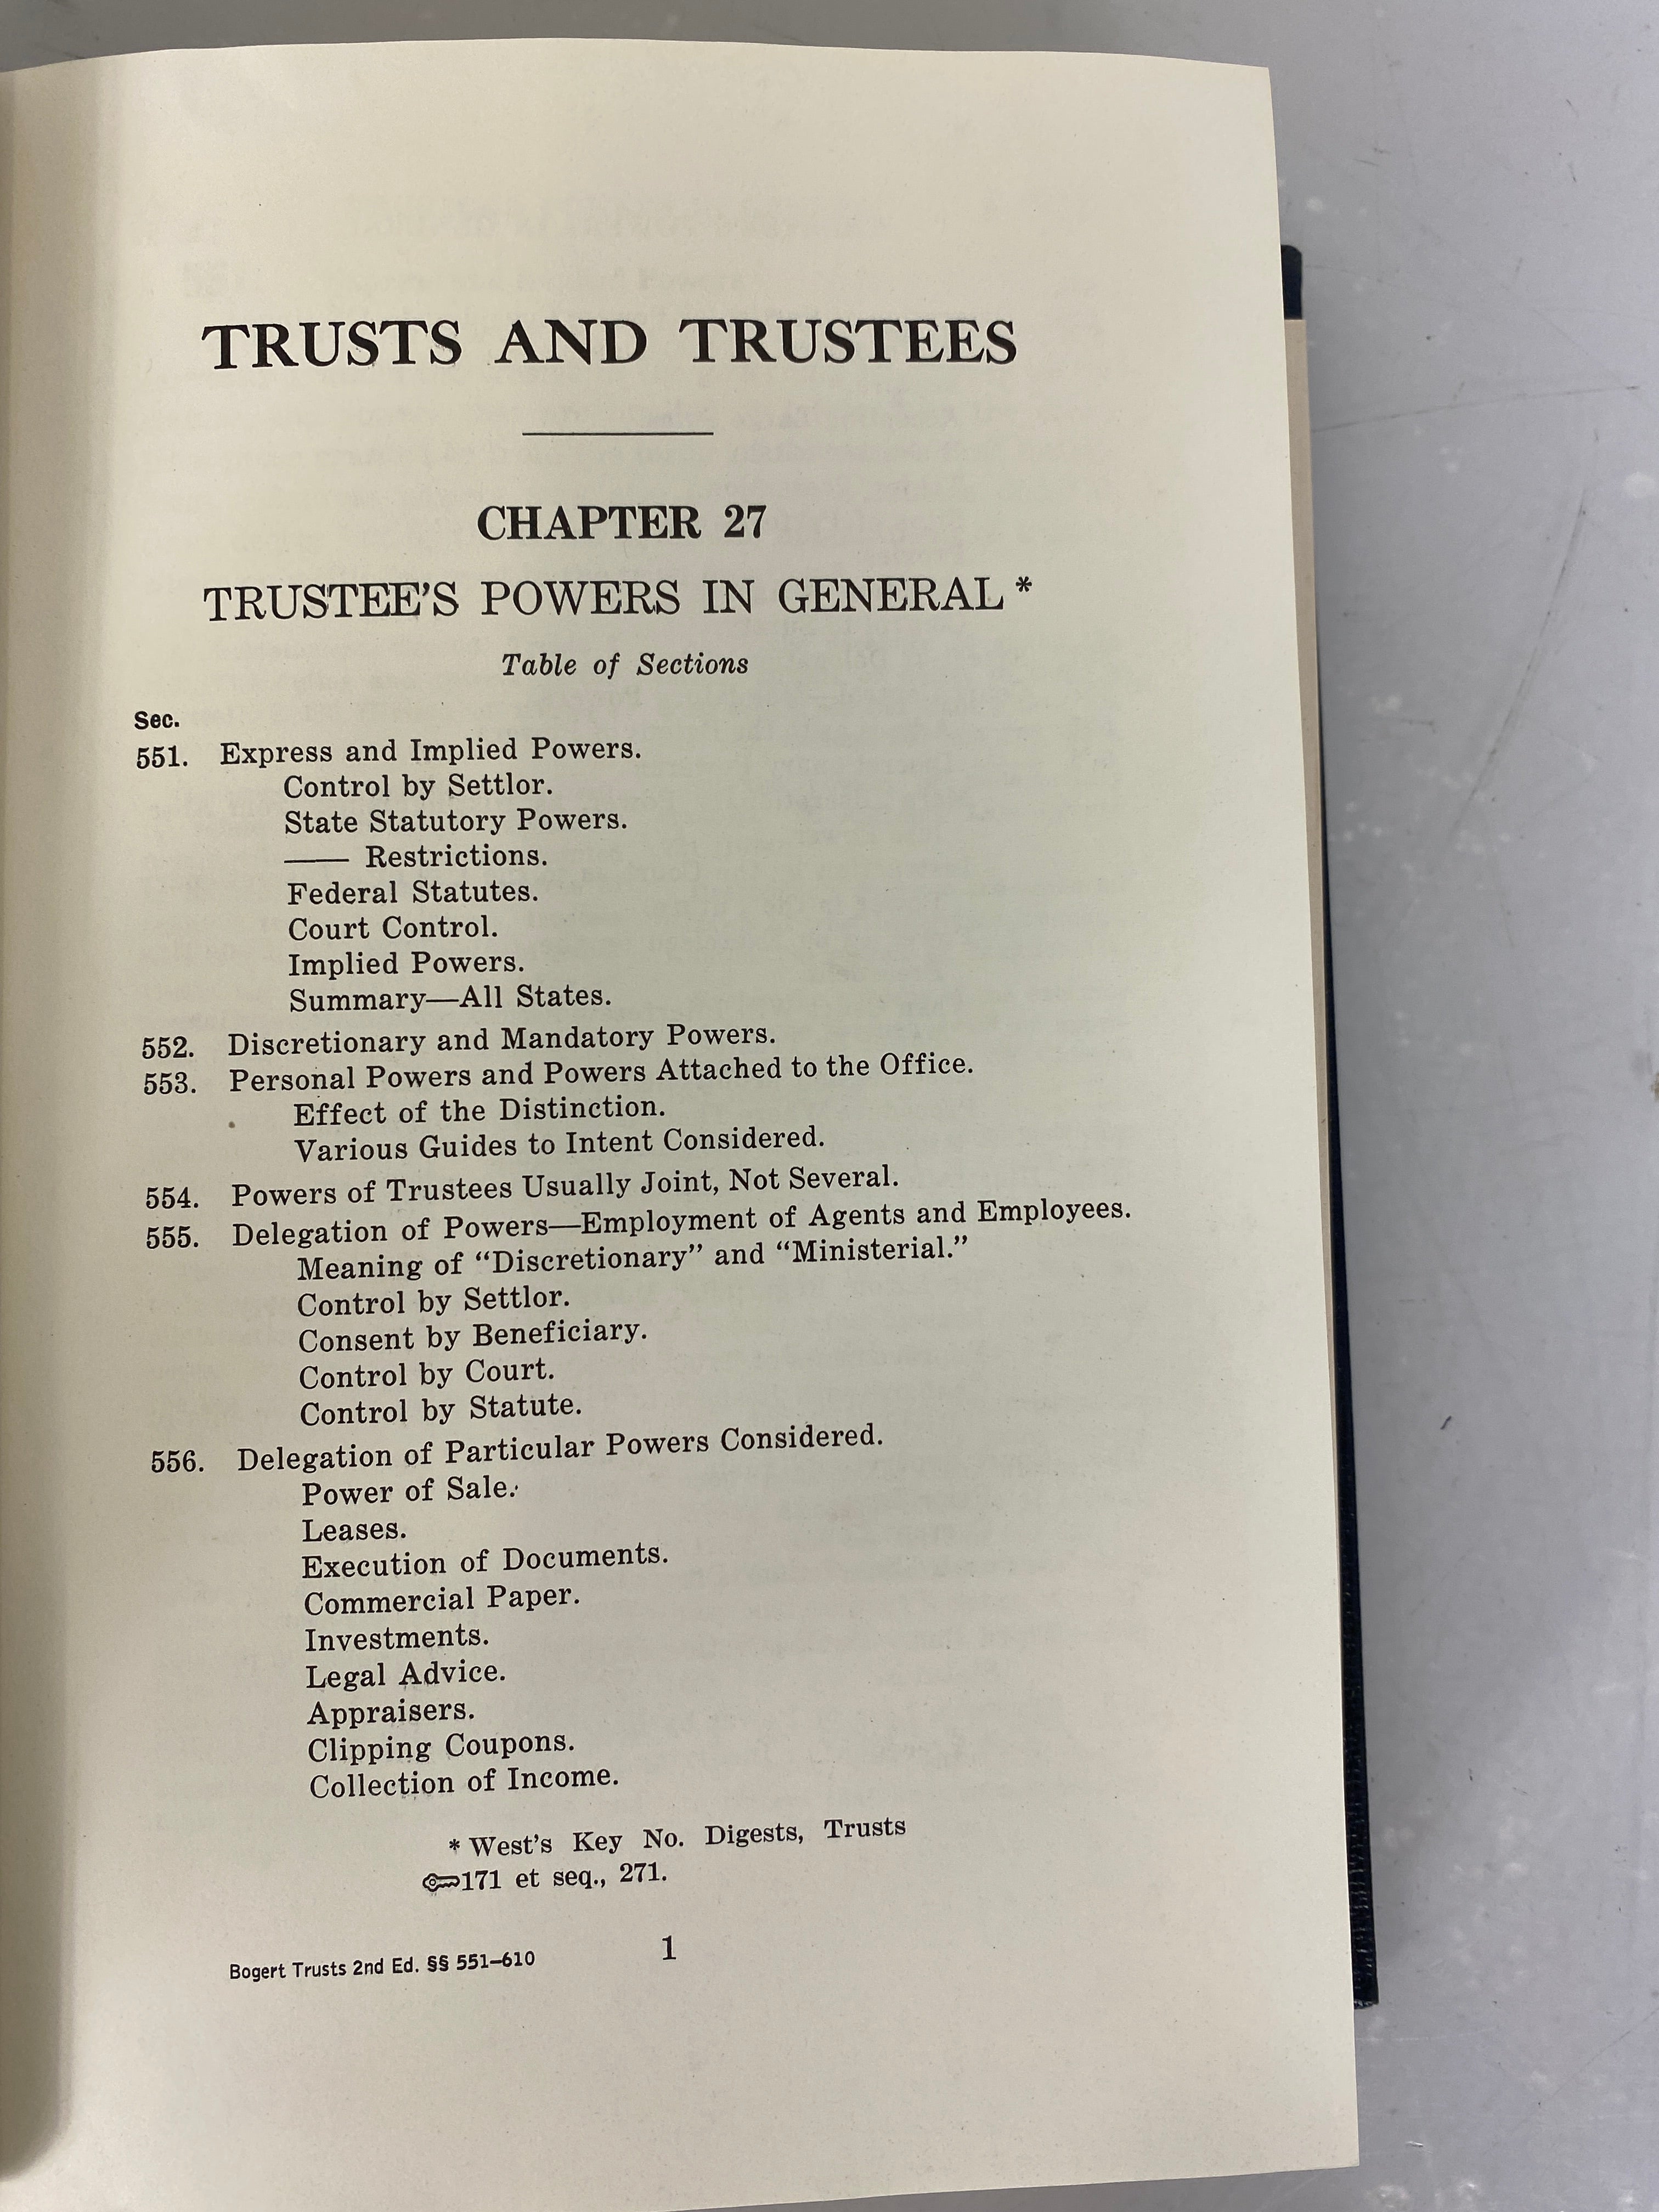 Bogert Trusts & Trustees Second Edition Revised (551-610) 1980 HC